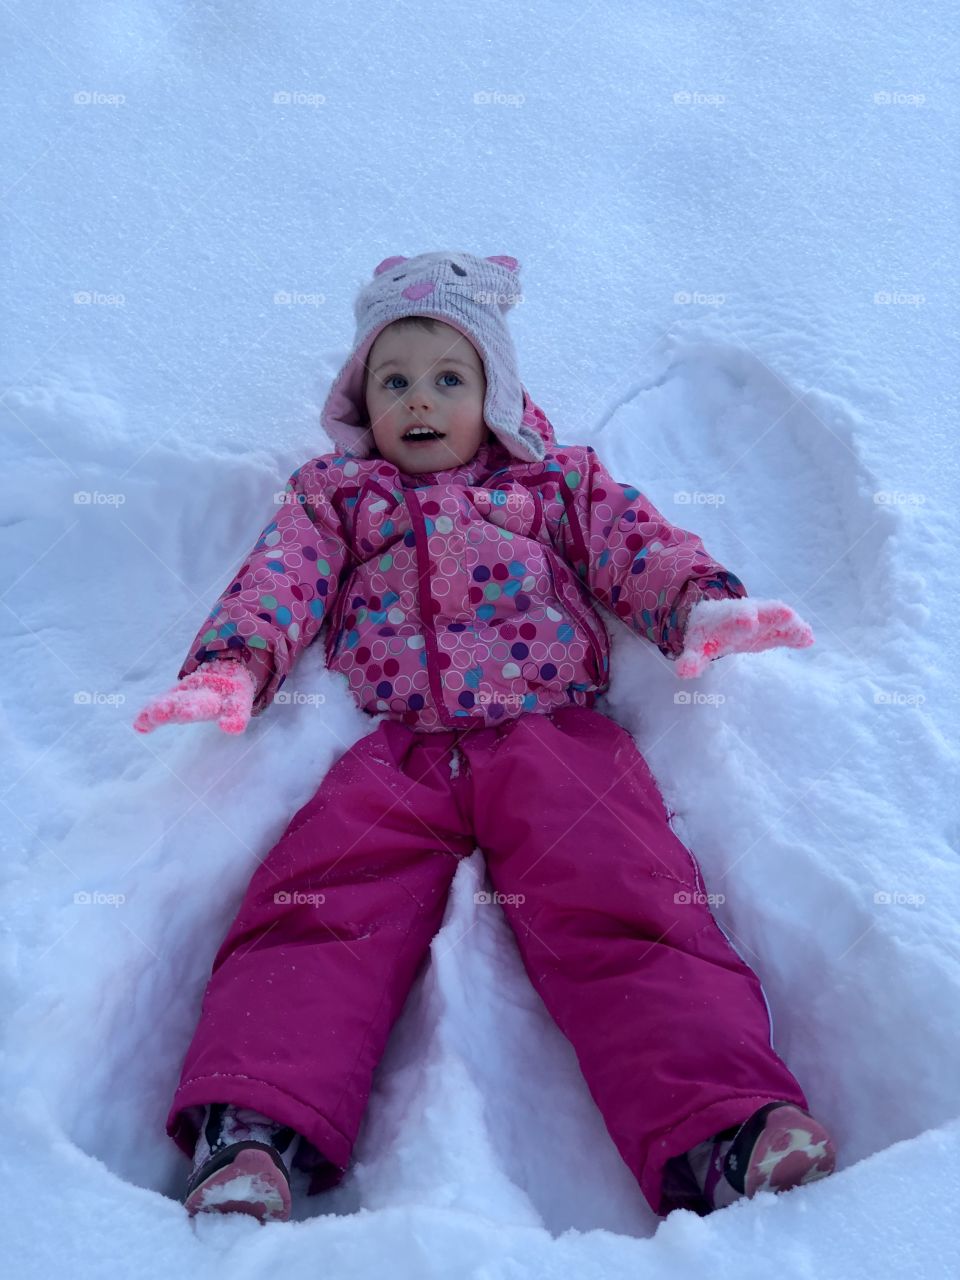 Ava the snow angel 